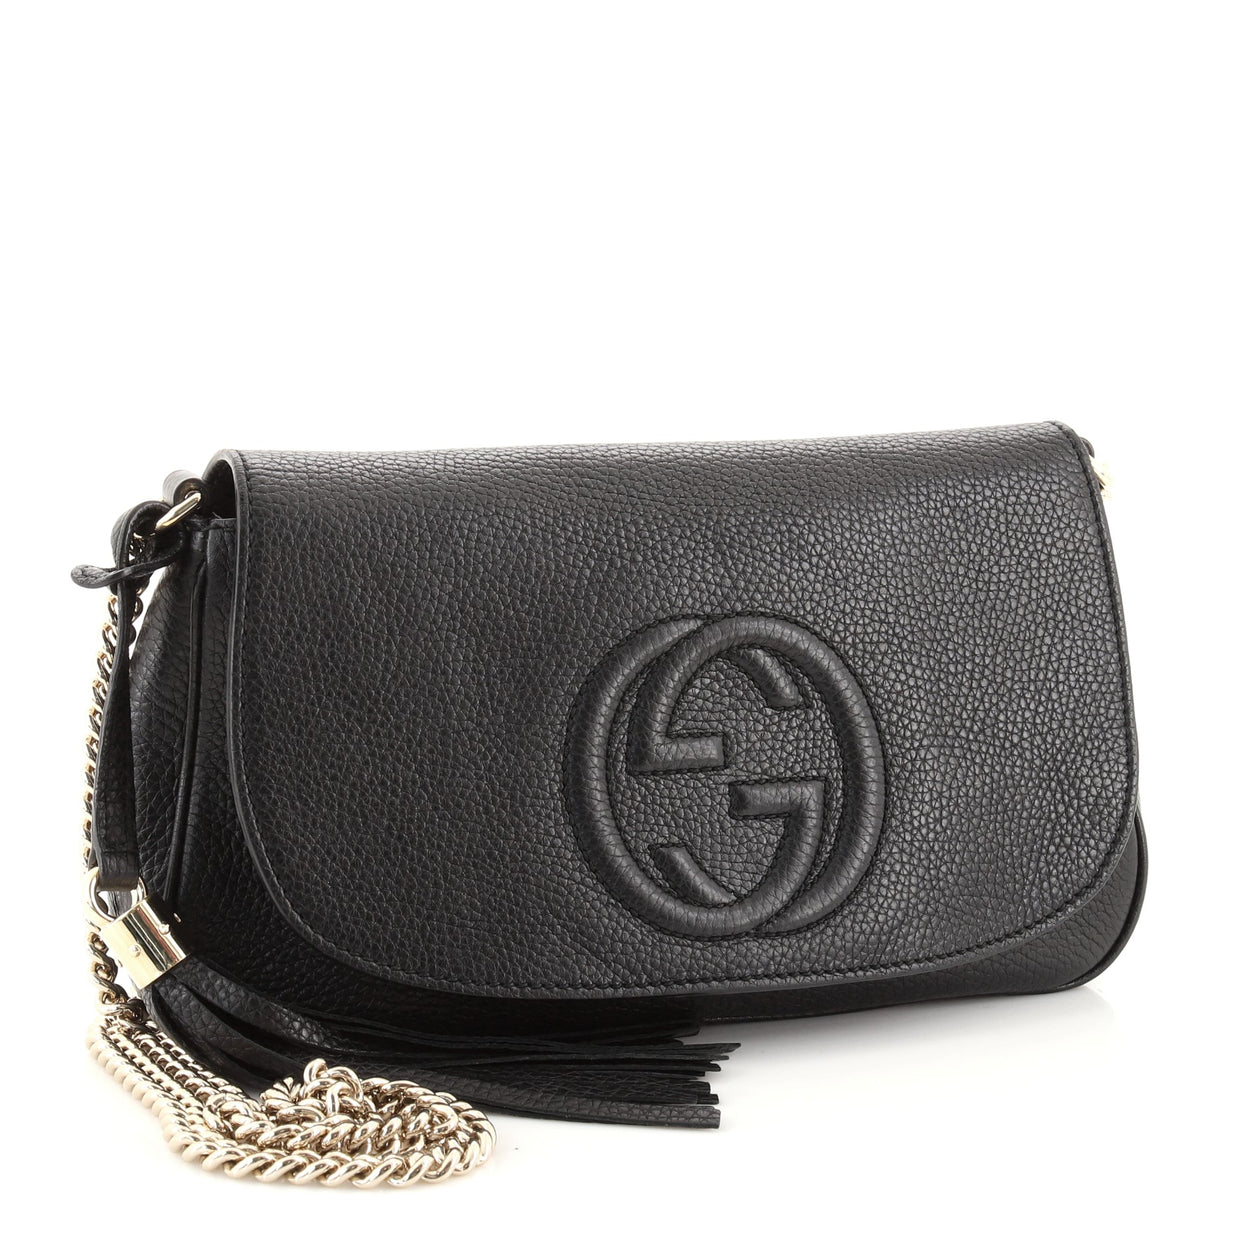 Gucci Soho Chain Crossbody Bag Leather Medium Black 843211